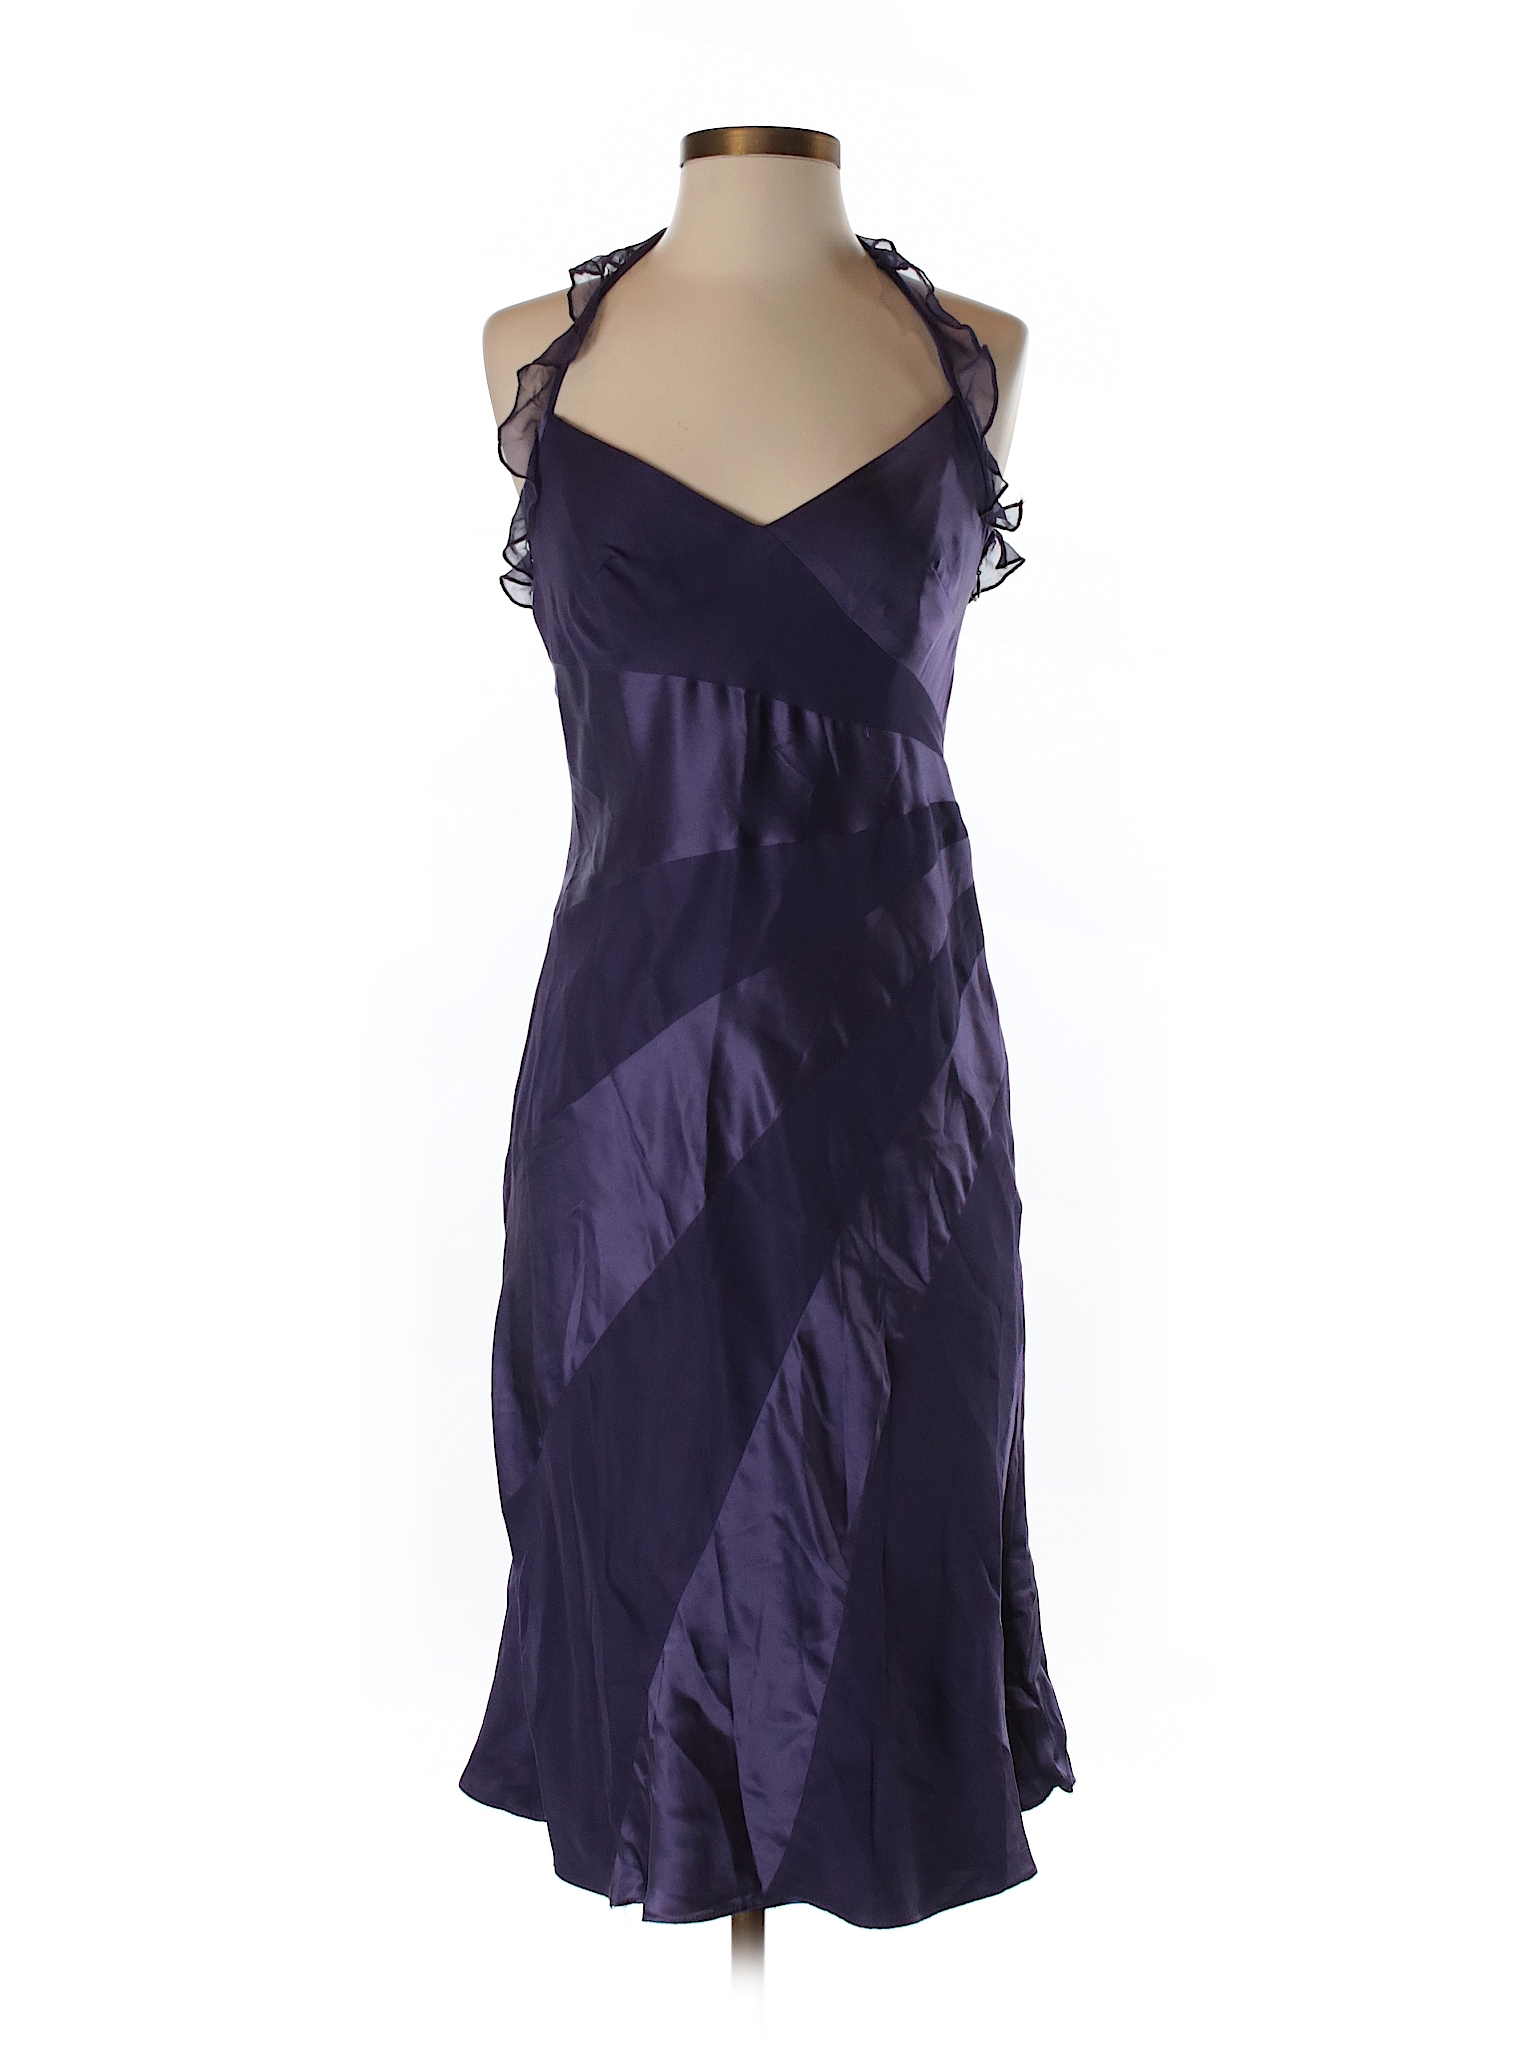 Laundry by Shelli Segal 100% Silk Metallic Dark Purple Cocktail Dress ...